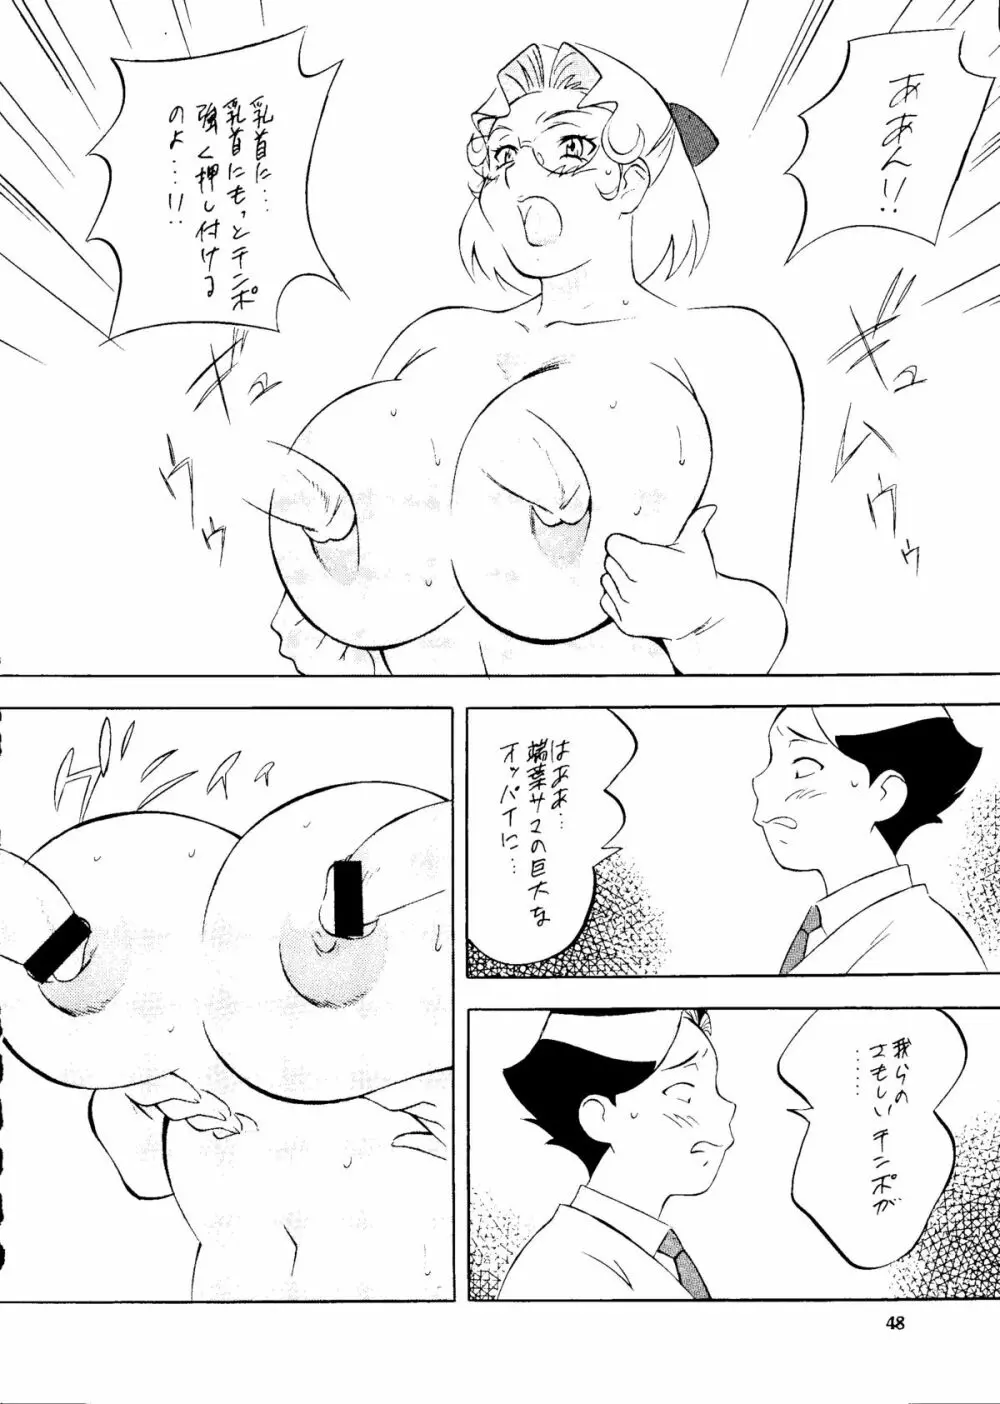 BUY or DIE おかちめんたいこ 47ページ